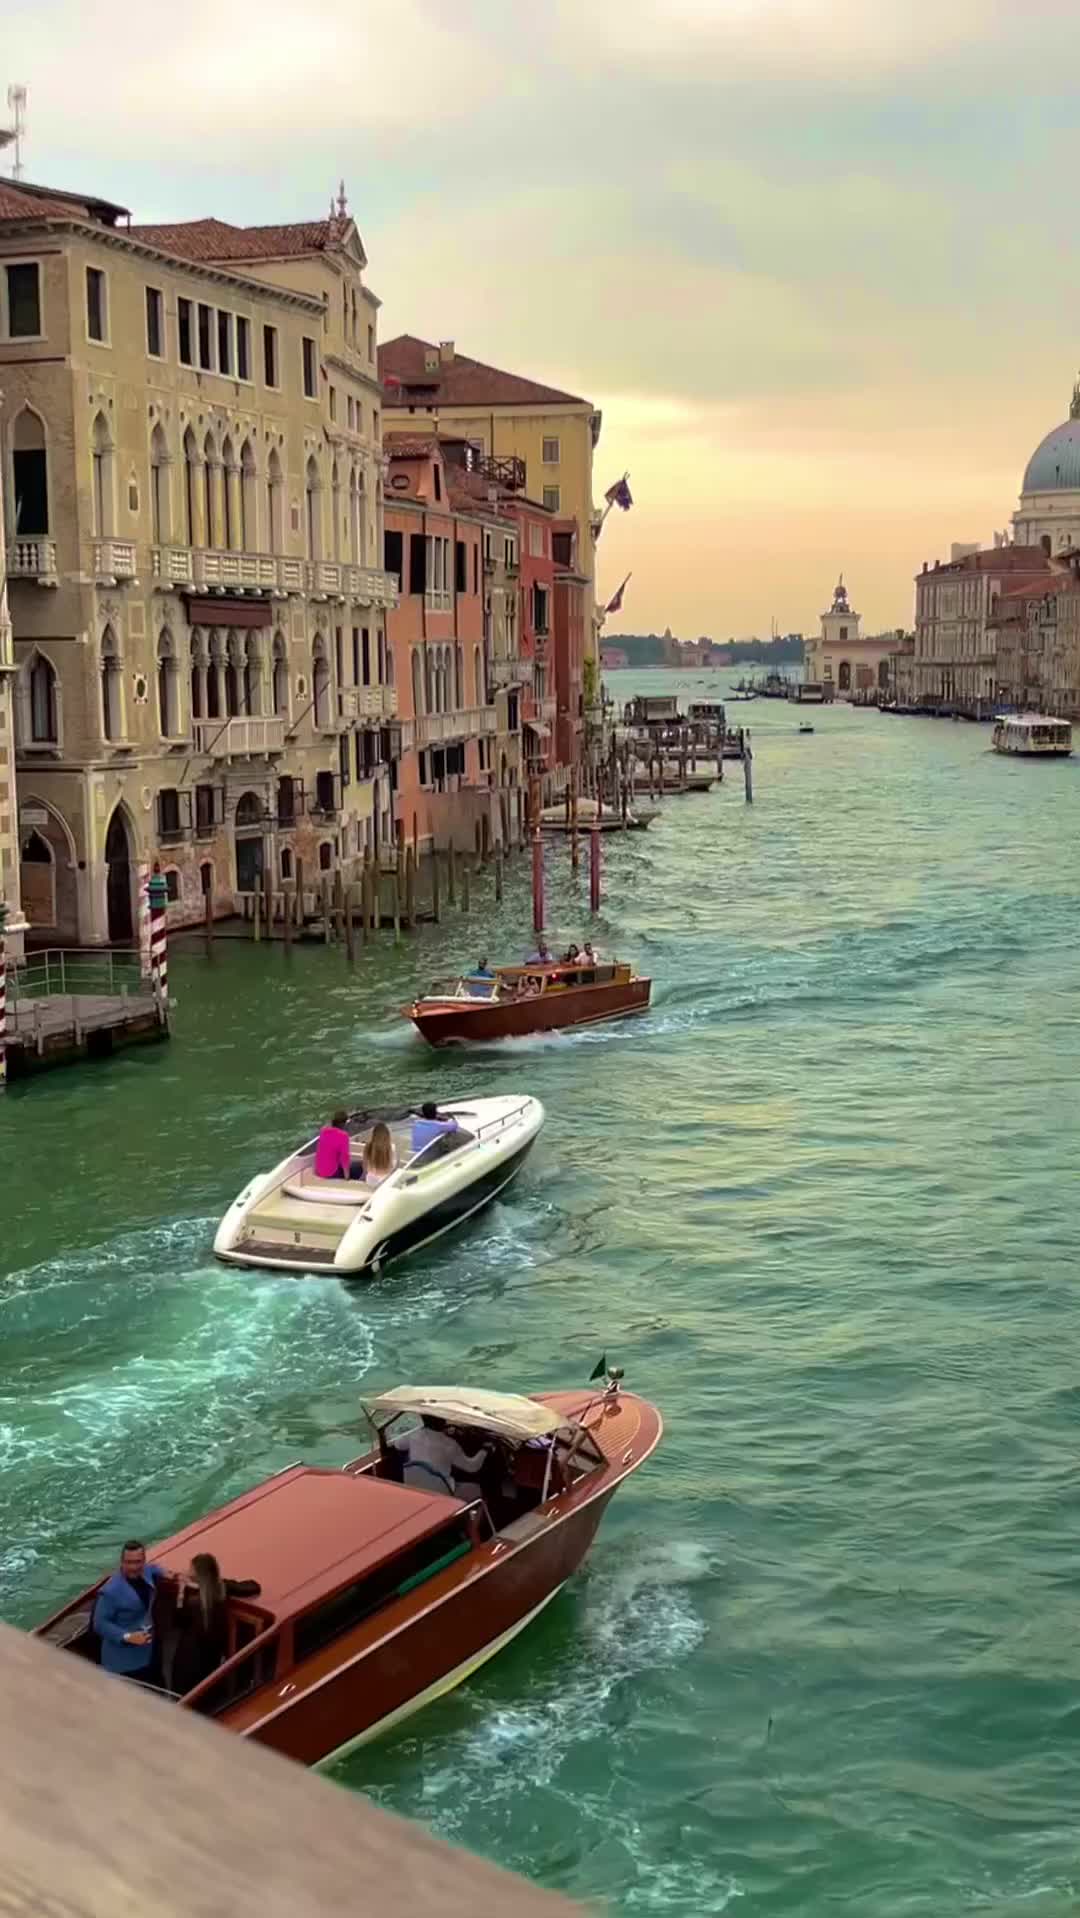 Stunning Sunset in Venice - A Must-Visit Destination